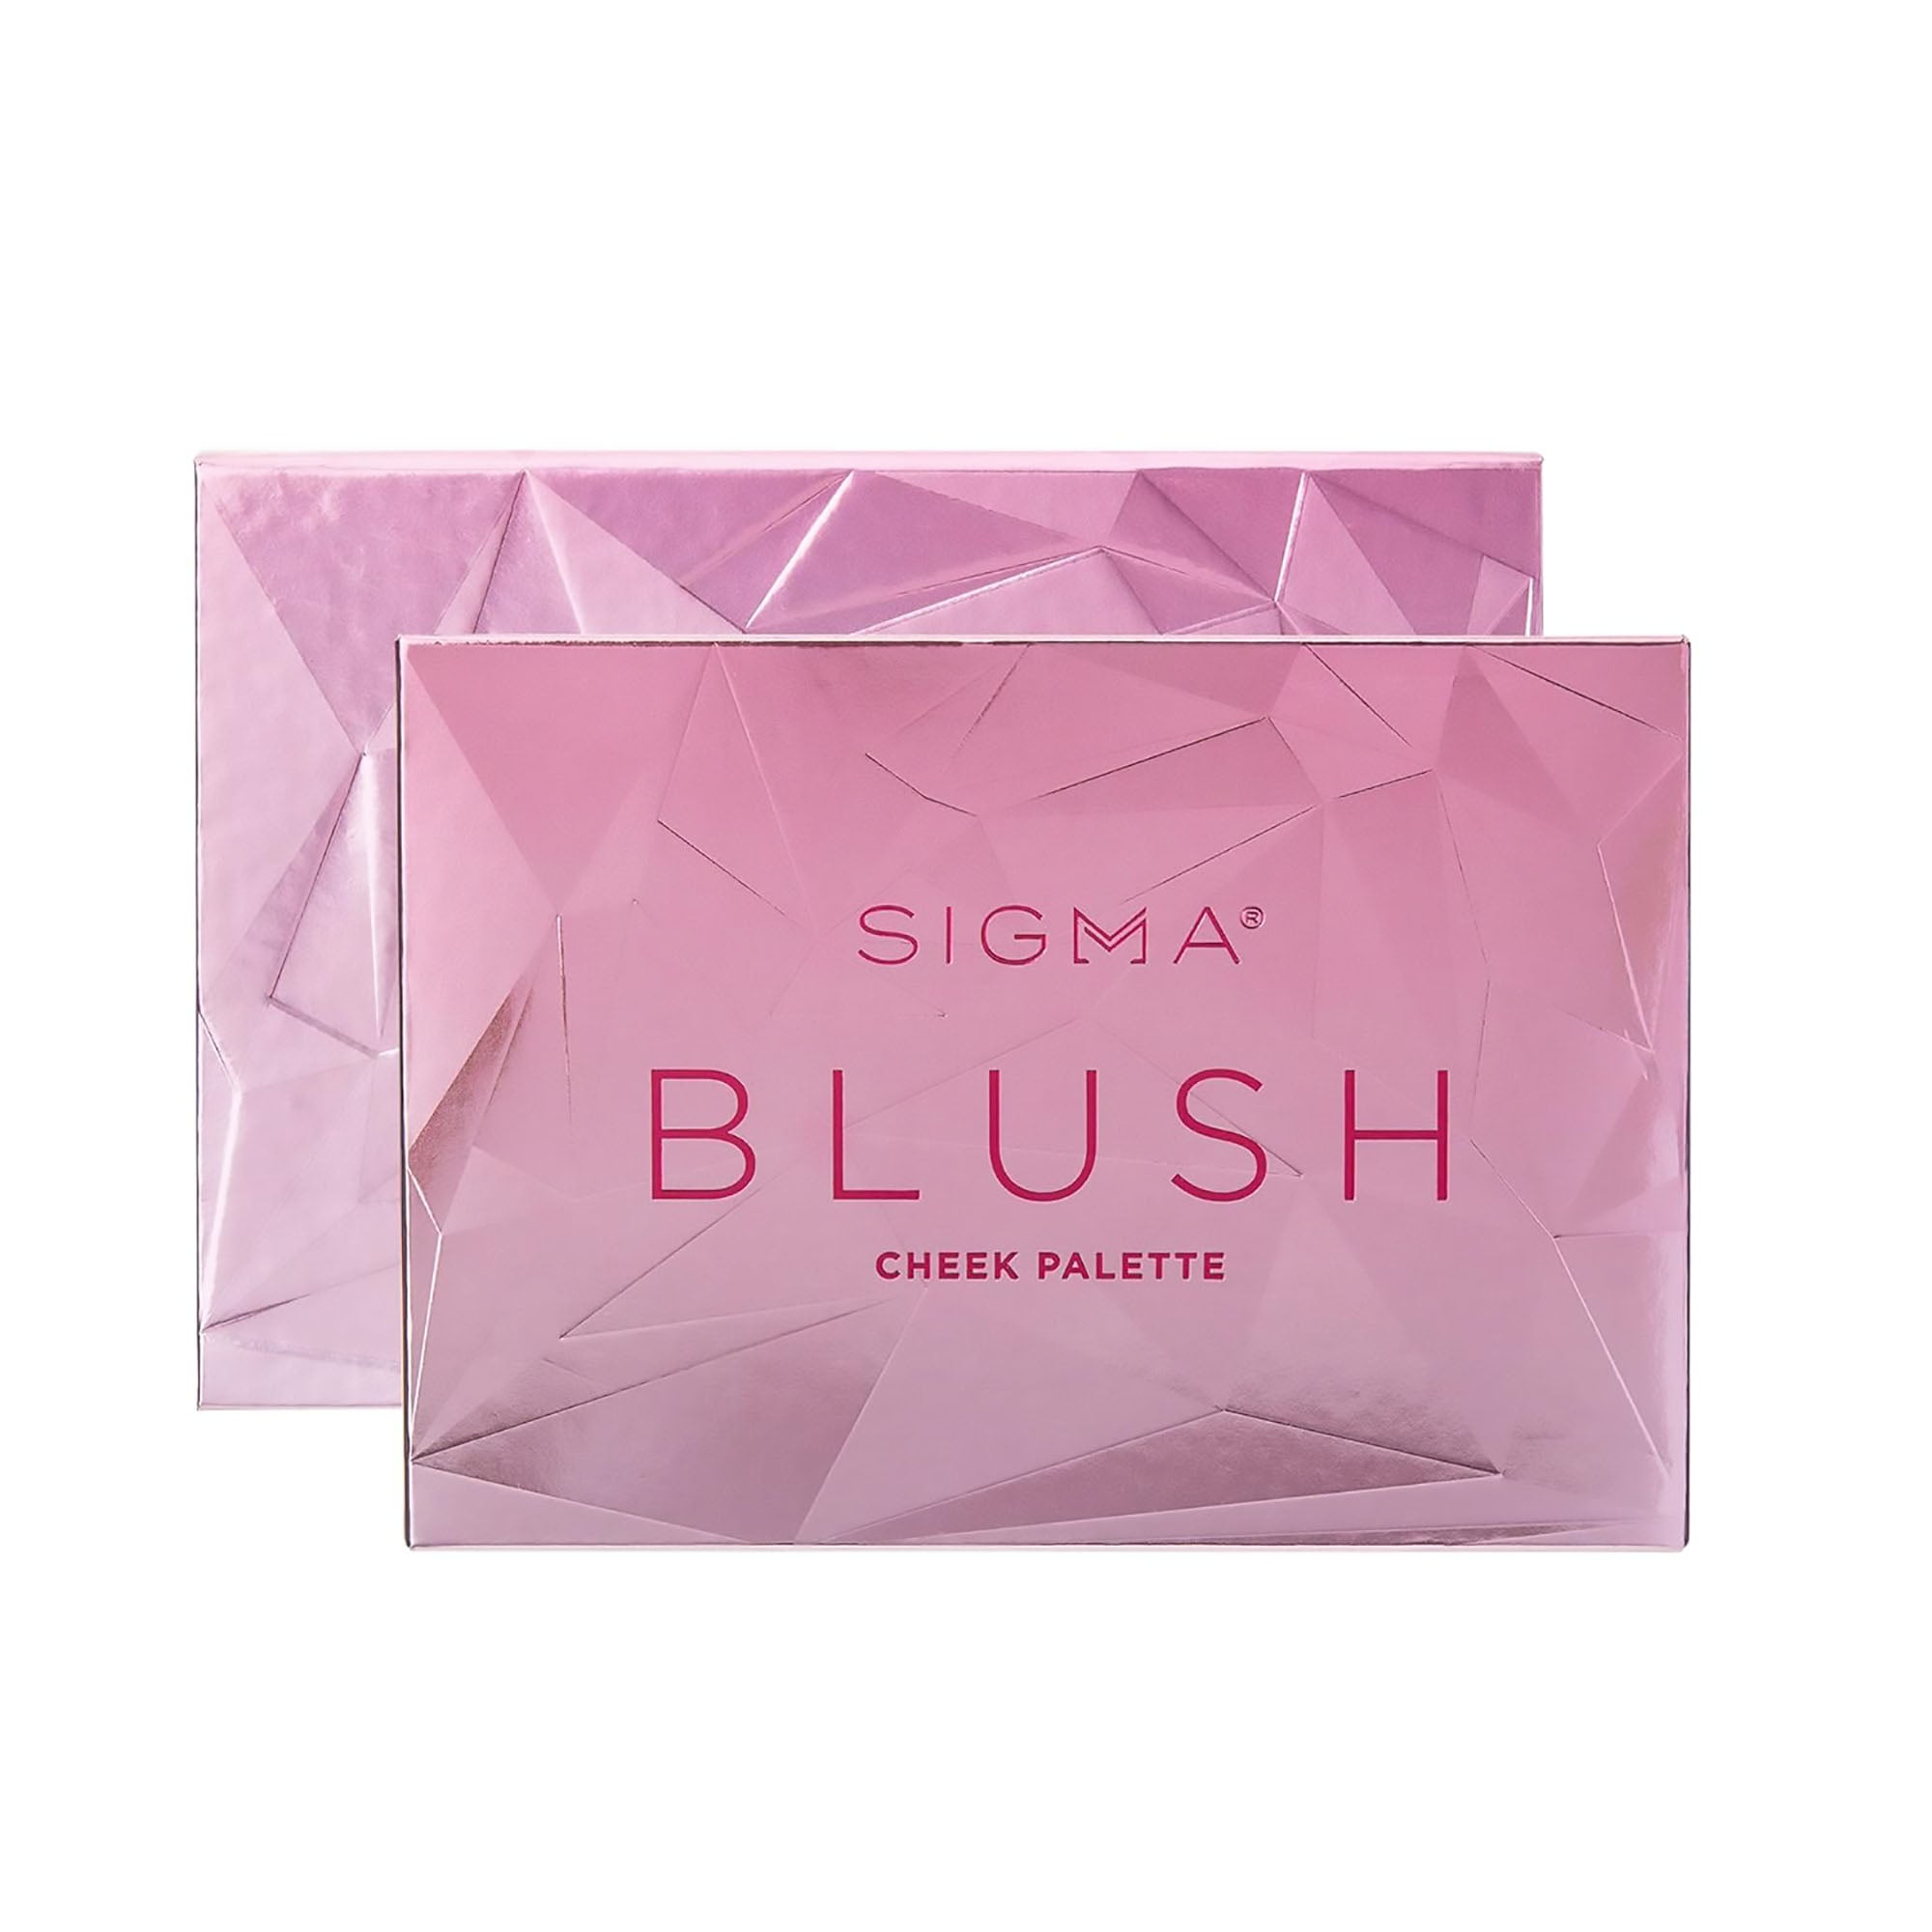 Sigma Blush Cheek Palette